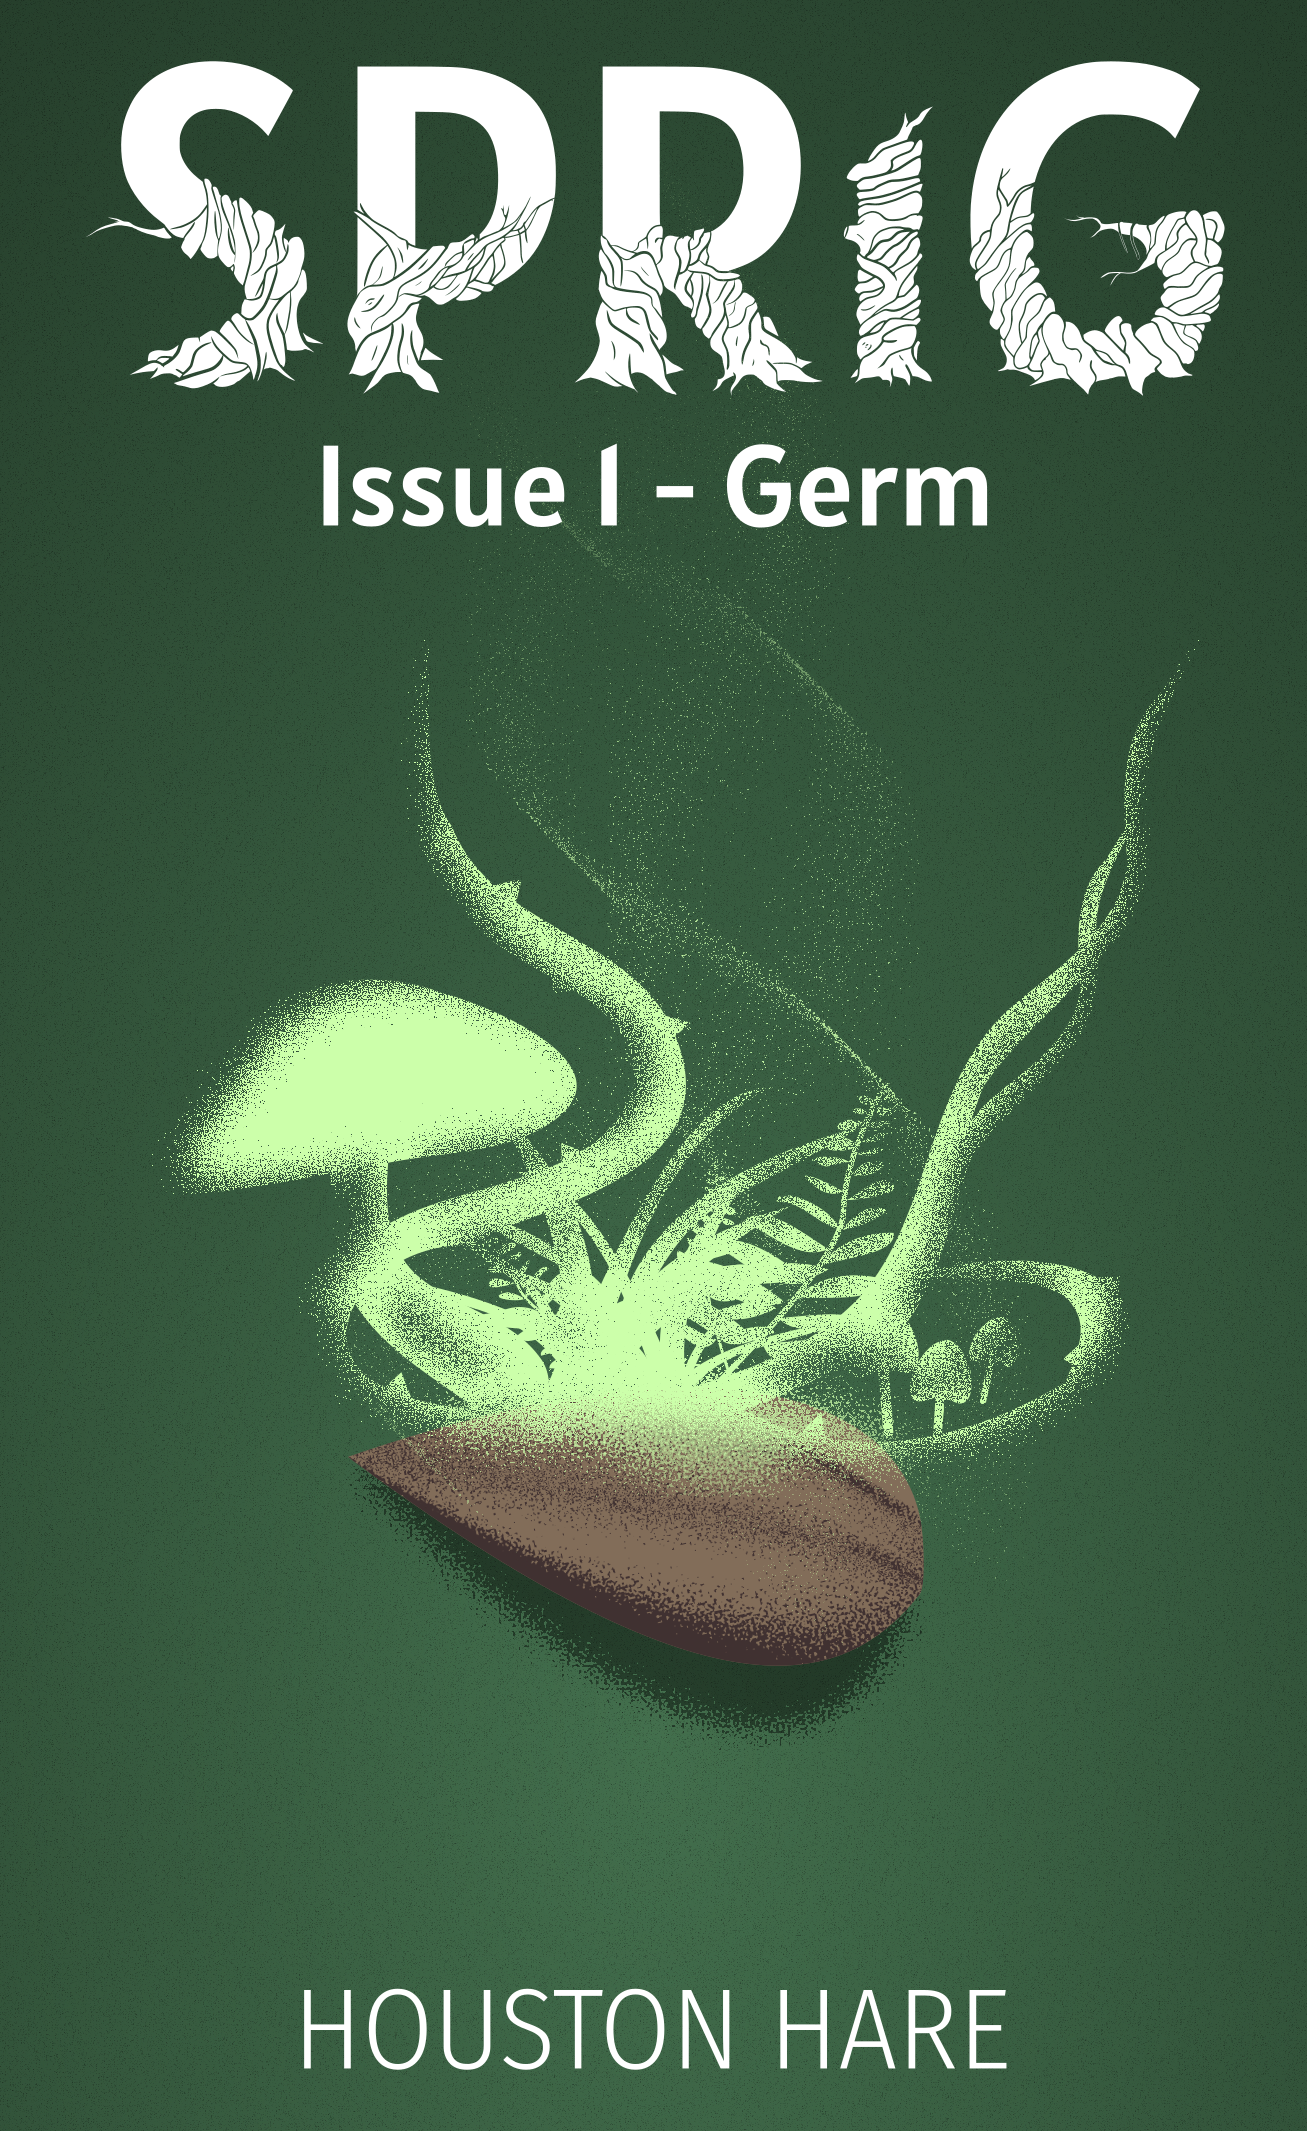 Sprig (Issue 1 - Germ) Paperback Release!